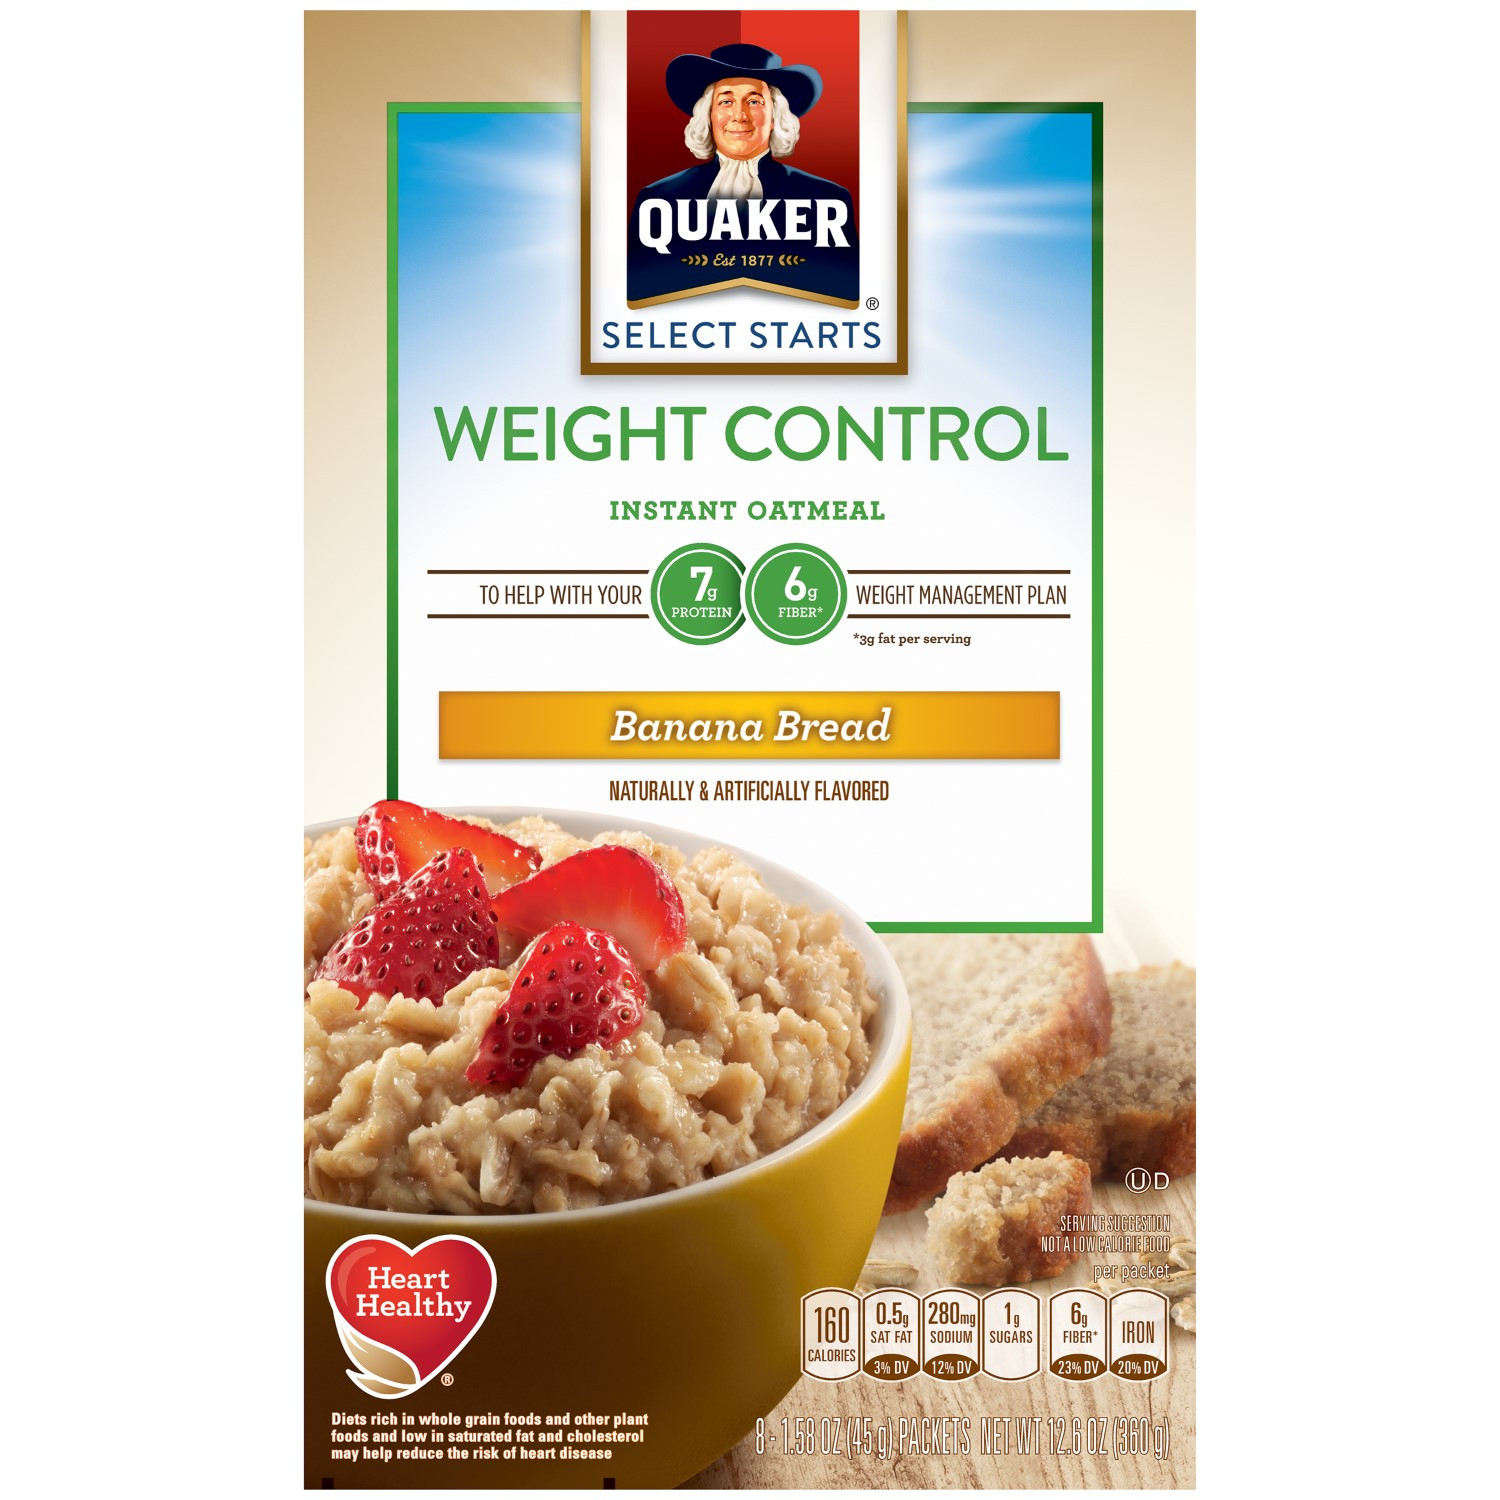 Quaker Oats Weight Loss
 Quaker Instant Oatmeal Weight Control Banana Bread 8